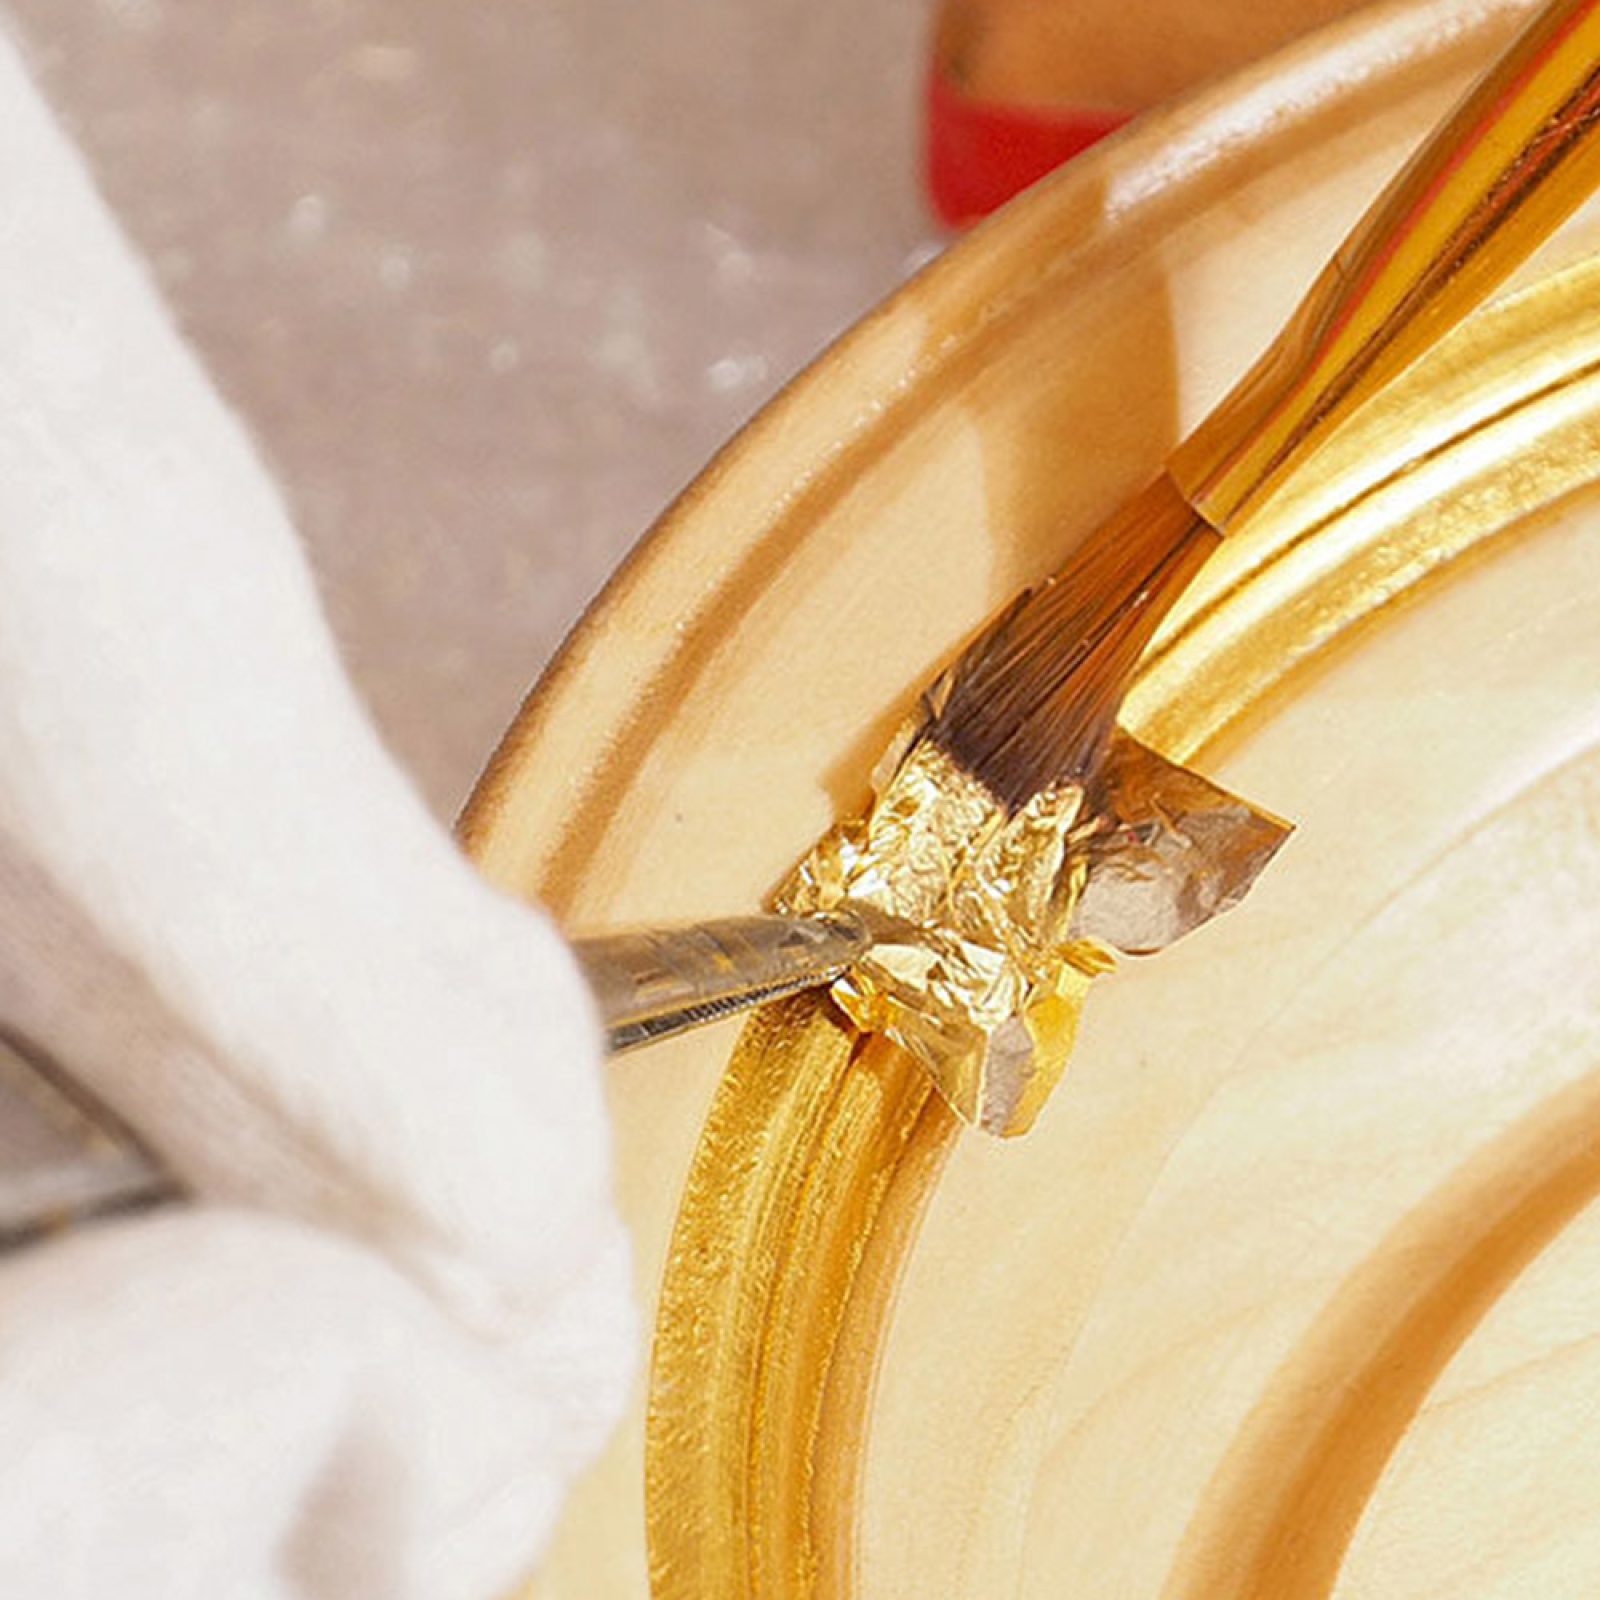 MANARA - Gilded with 24-carat gold